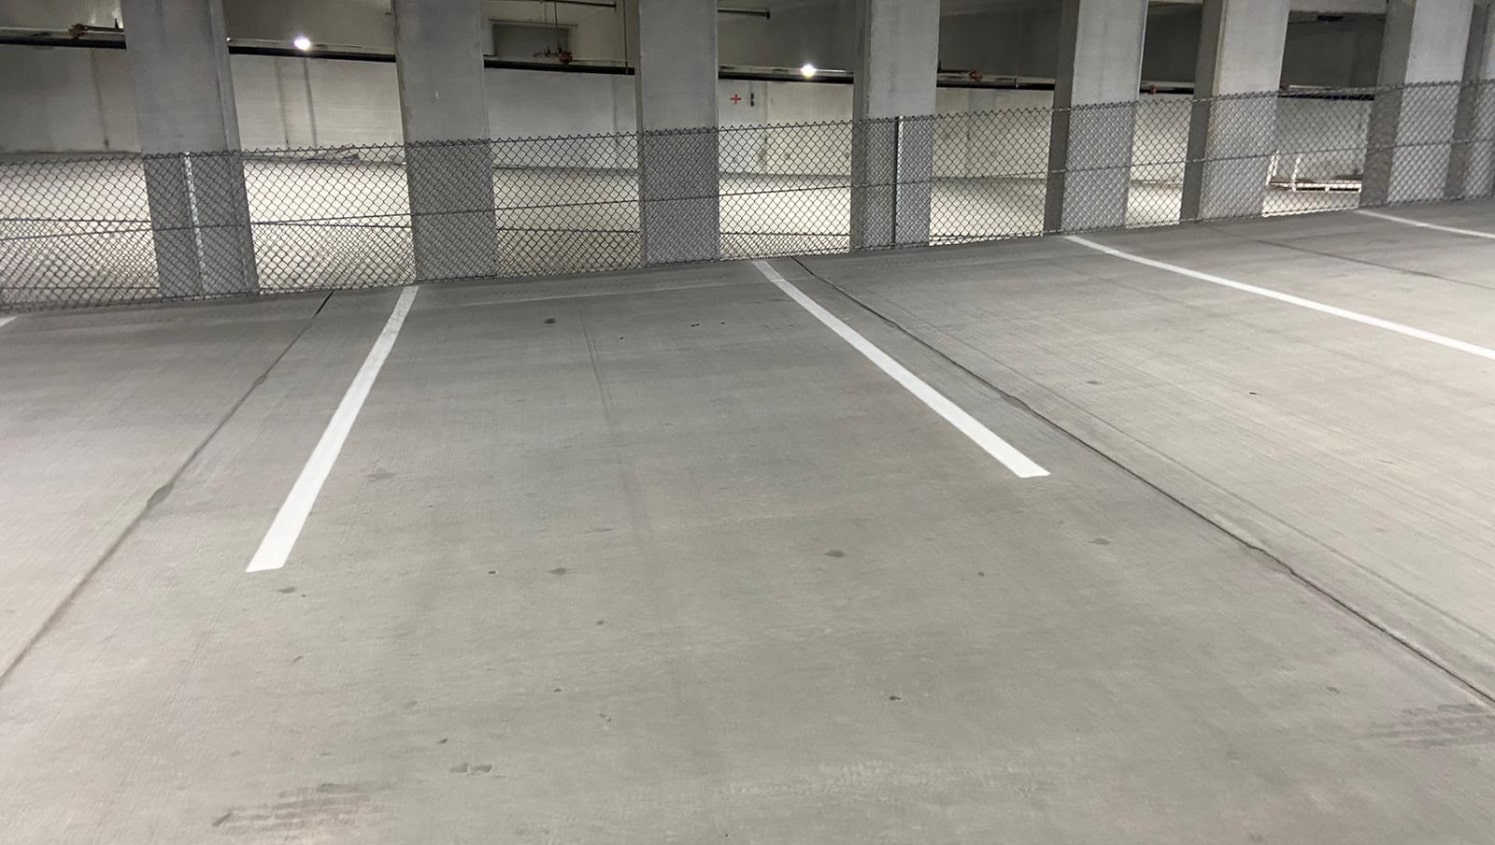 parking spaces in a parking garage